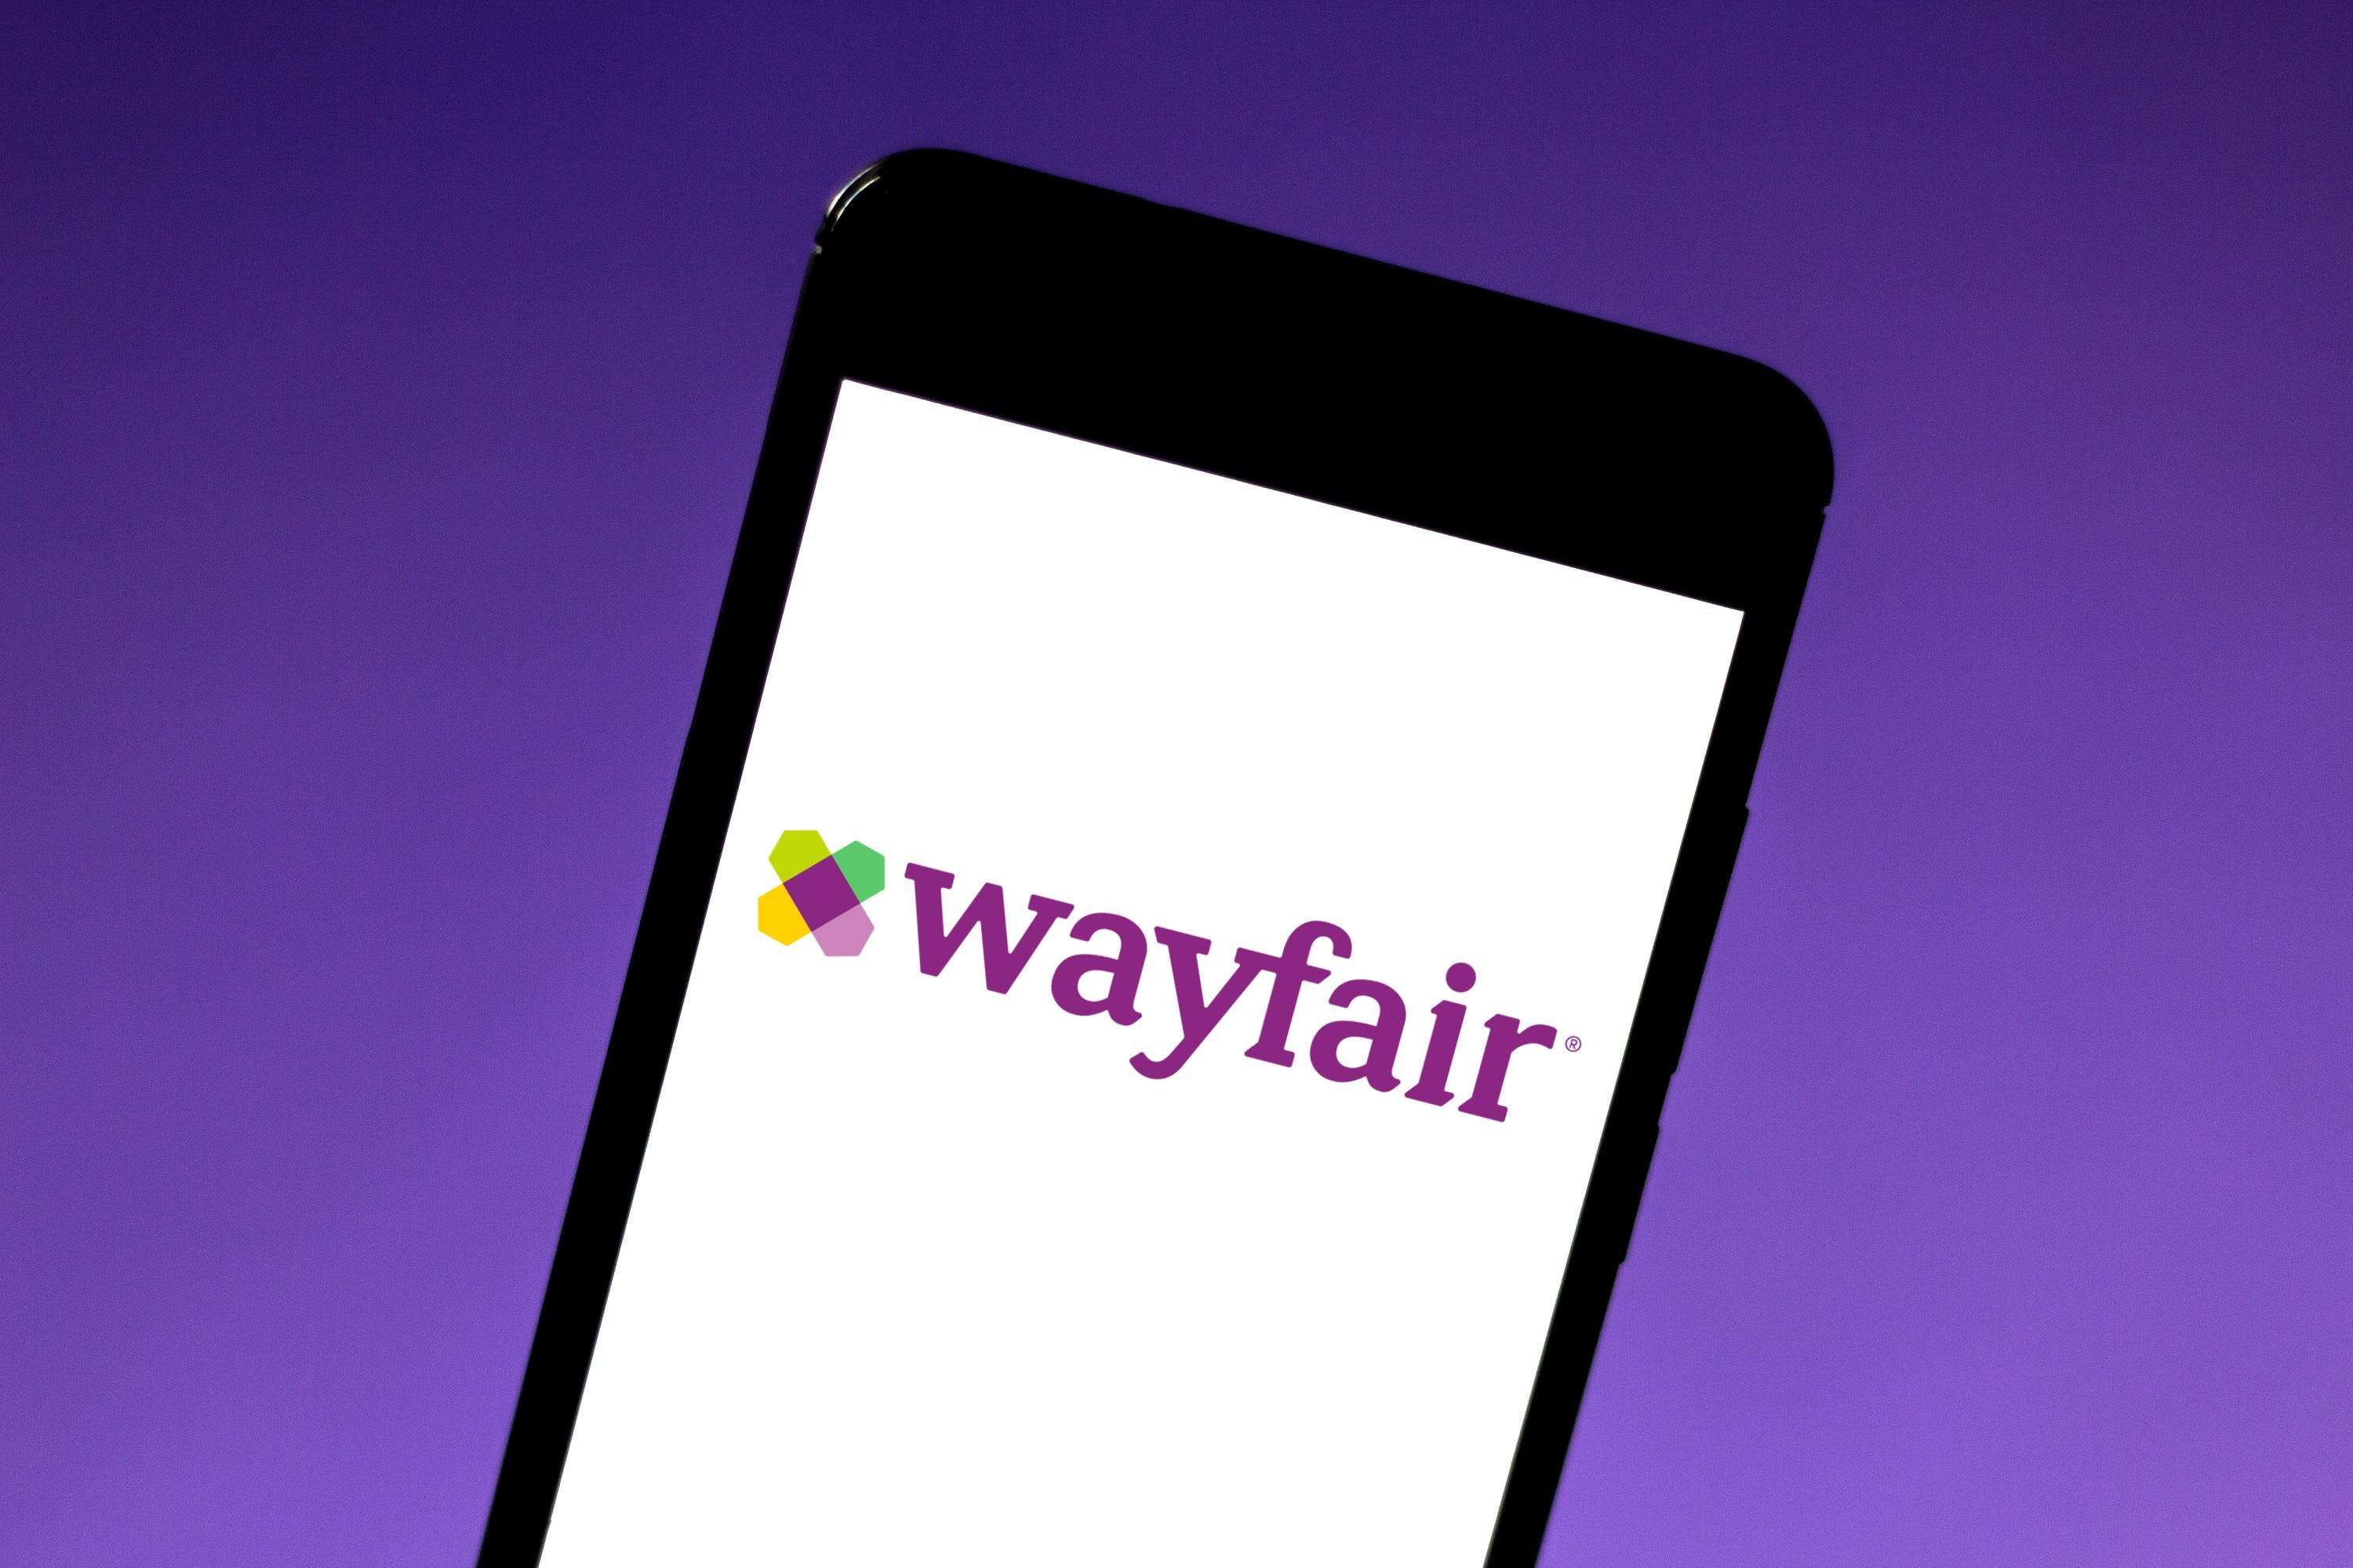 wayfair interview case study examples